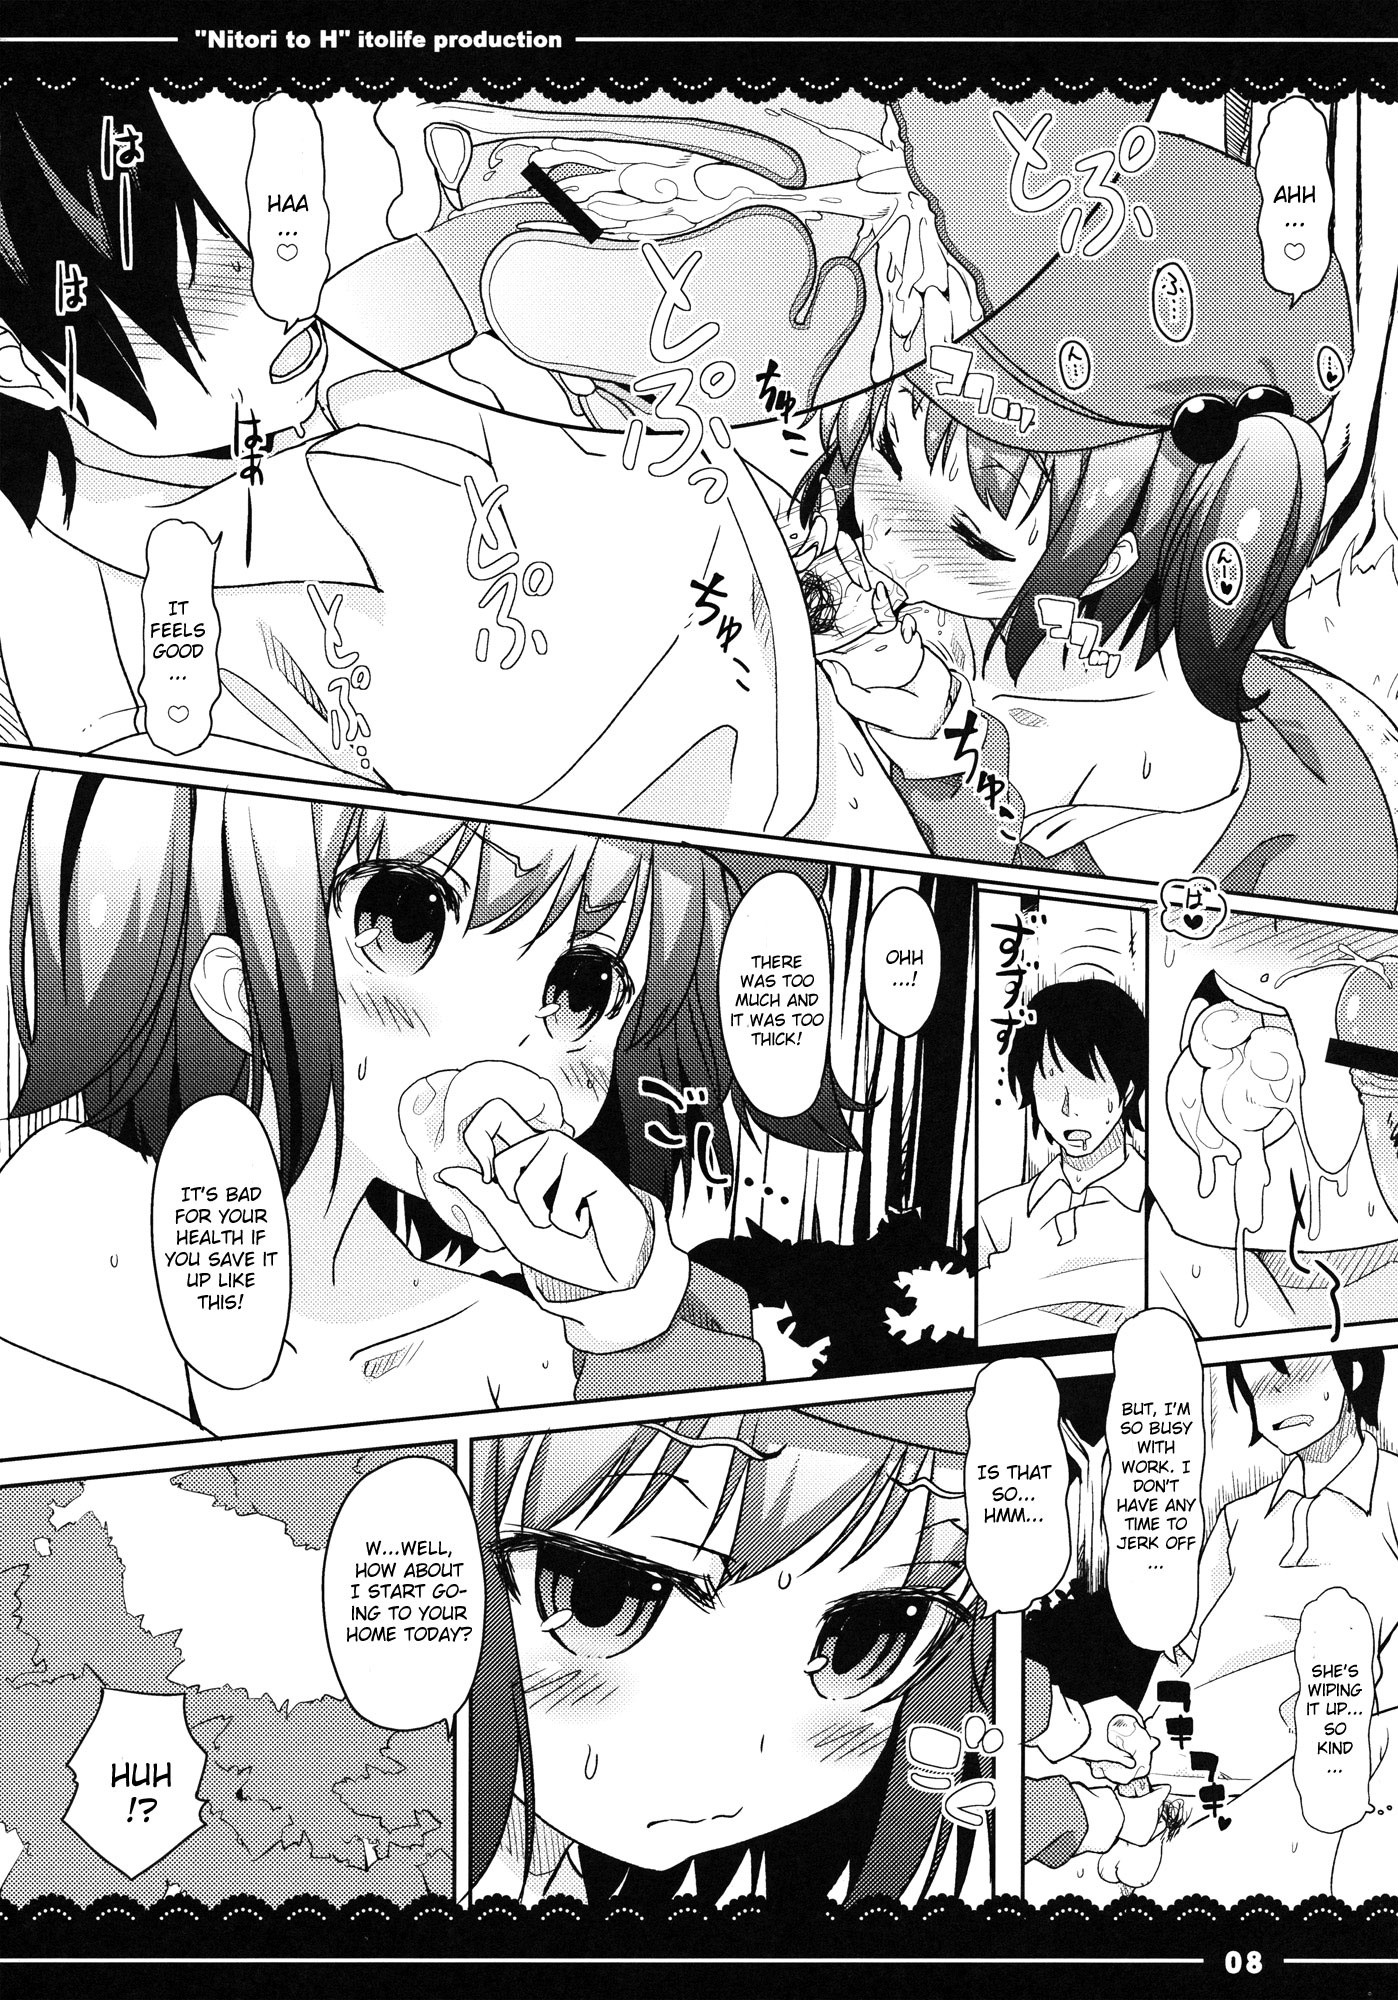 Nitori to Ecchi hentai manga picture 7